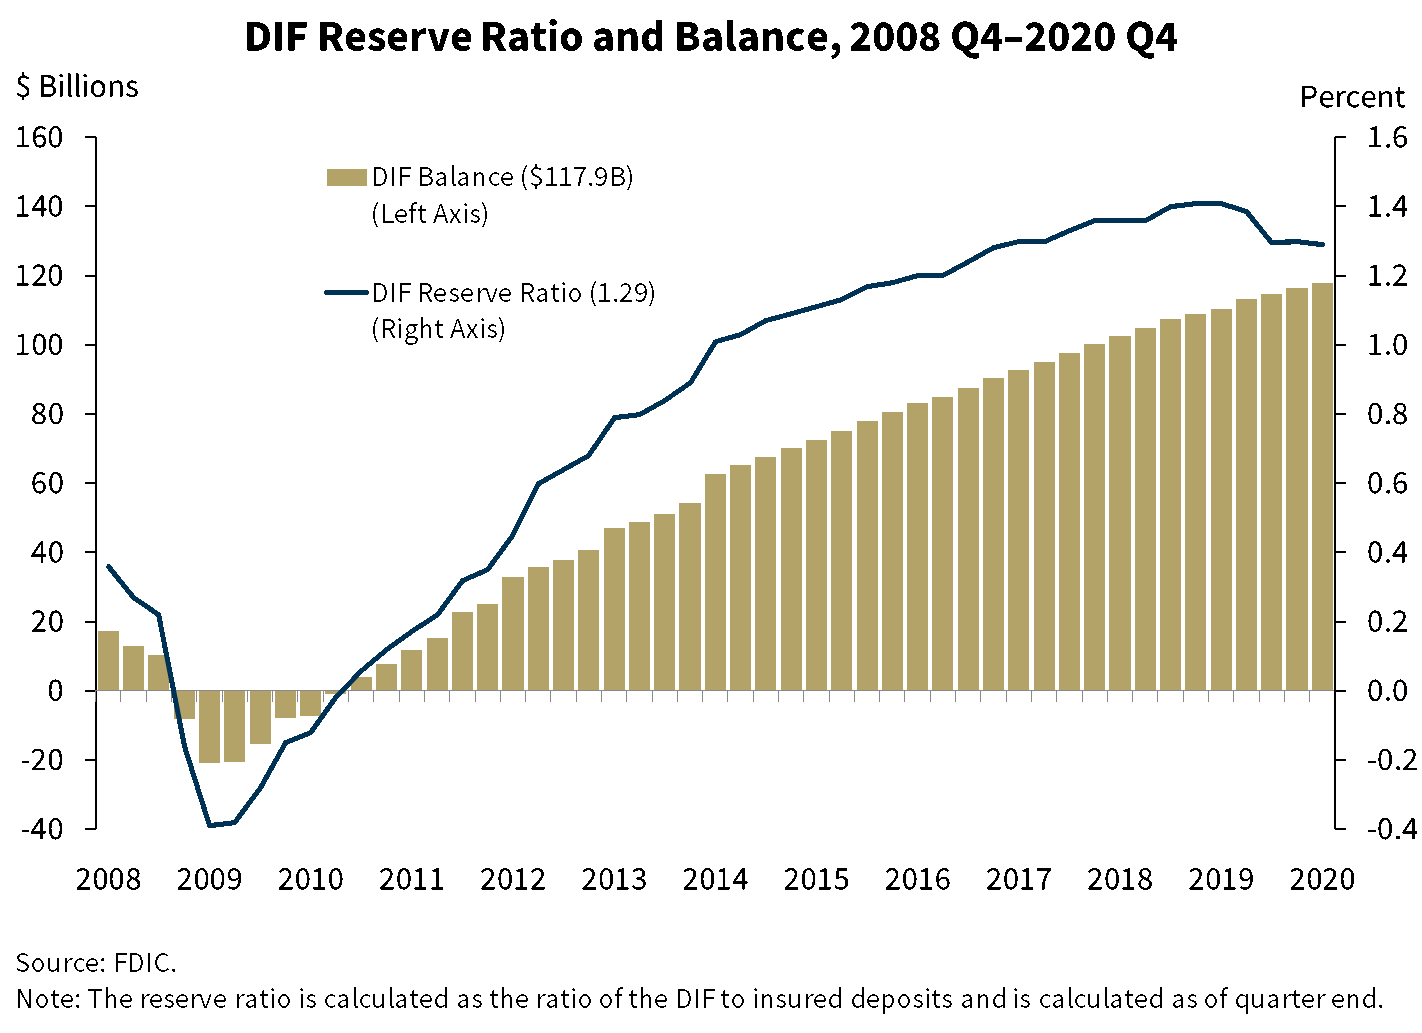 Chart 11: DIF Reserve Ratio and Balance, 2008 Q4-2020 Q4